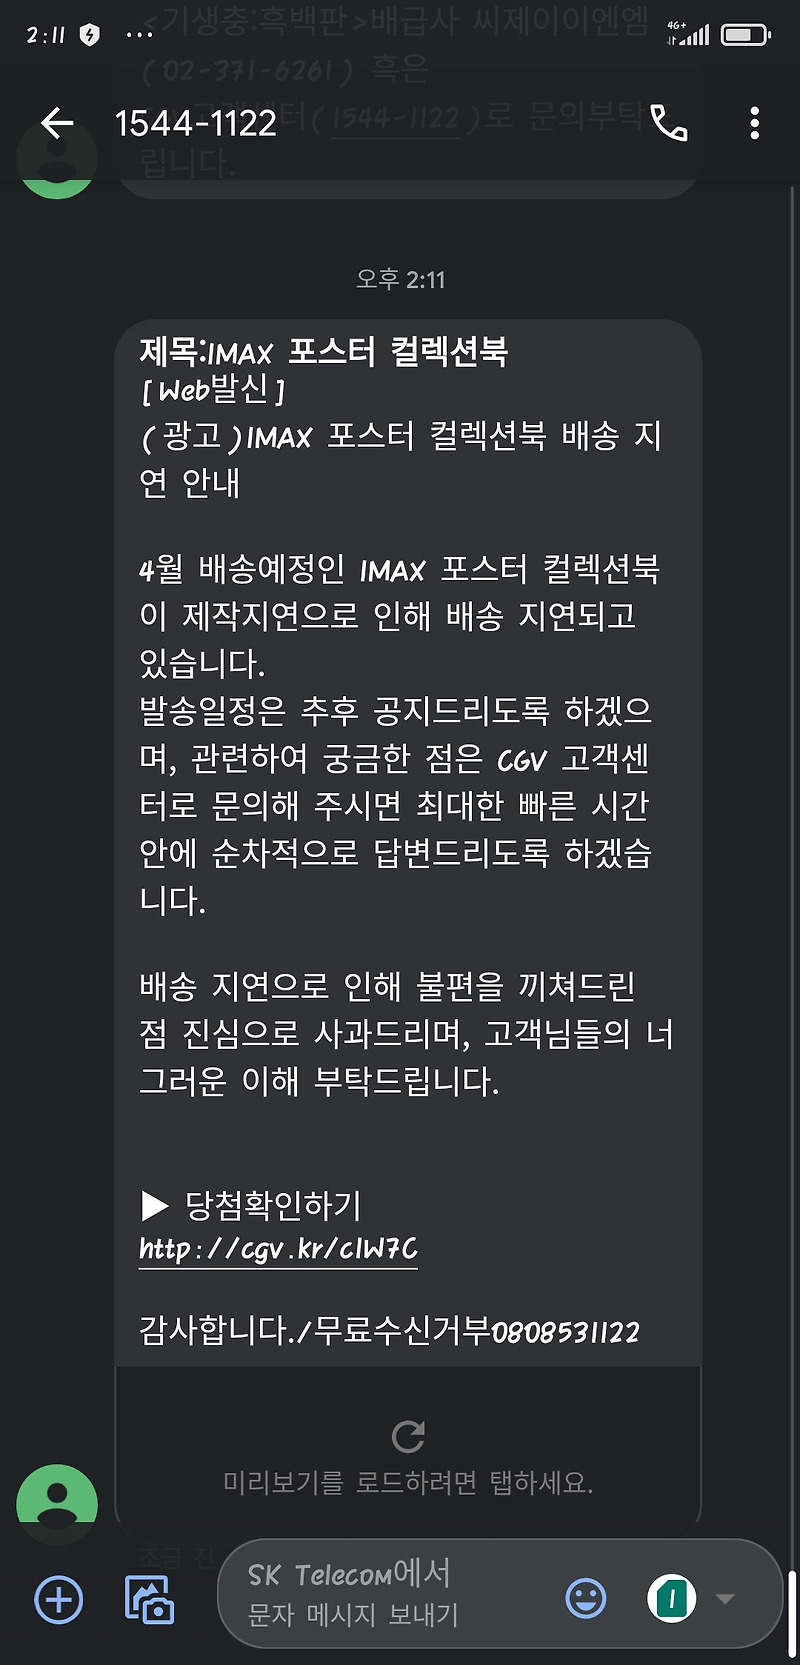 CGV IMAX 컬렉션북 지연